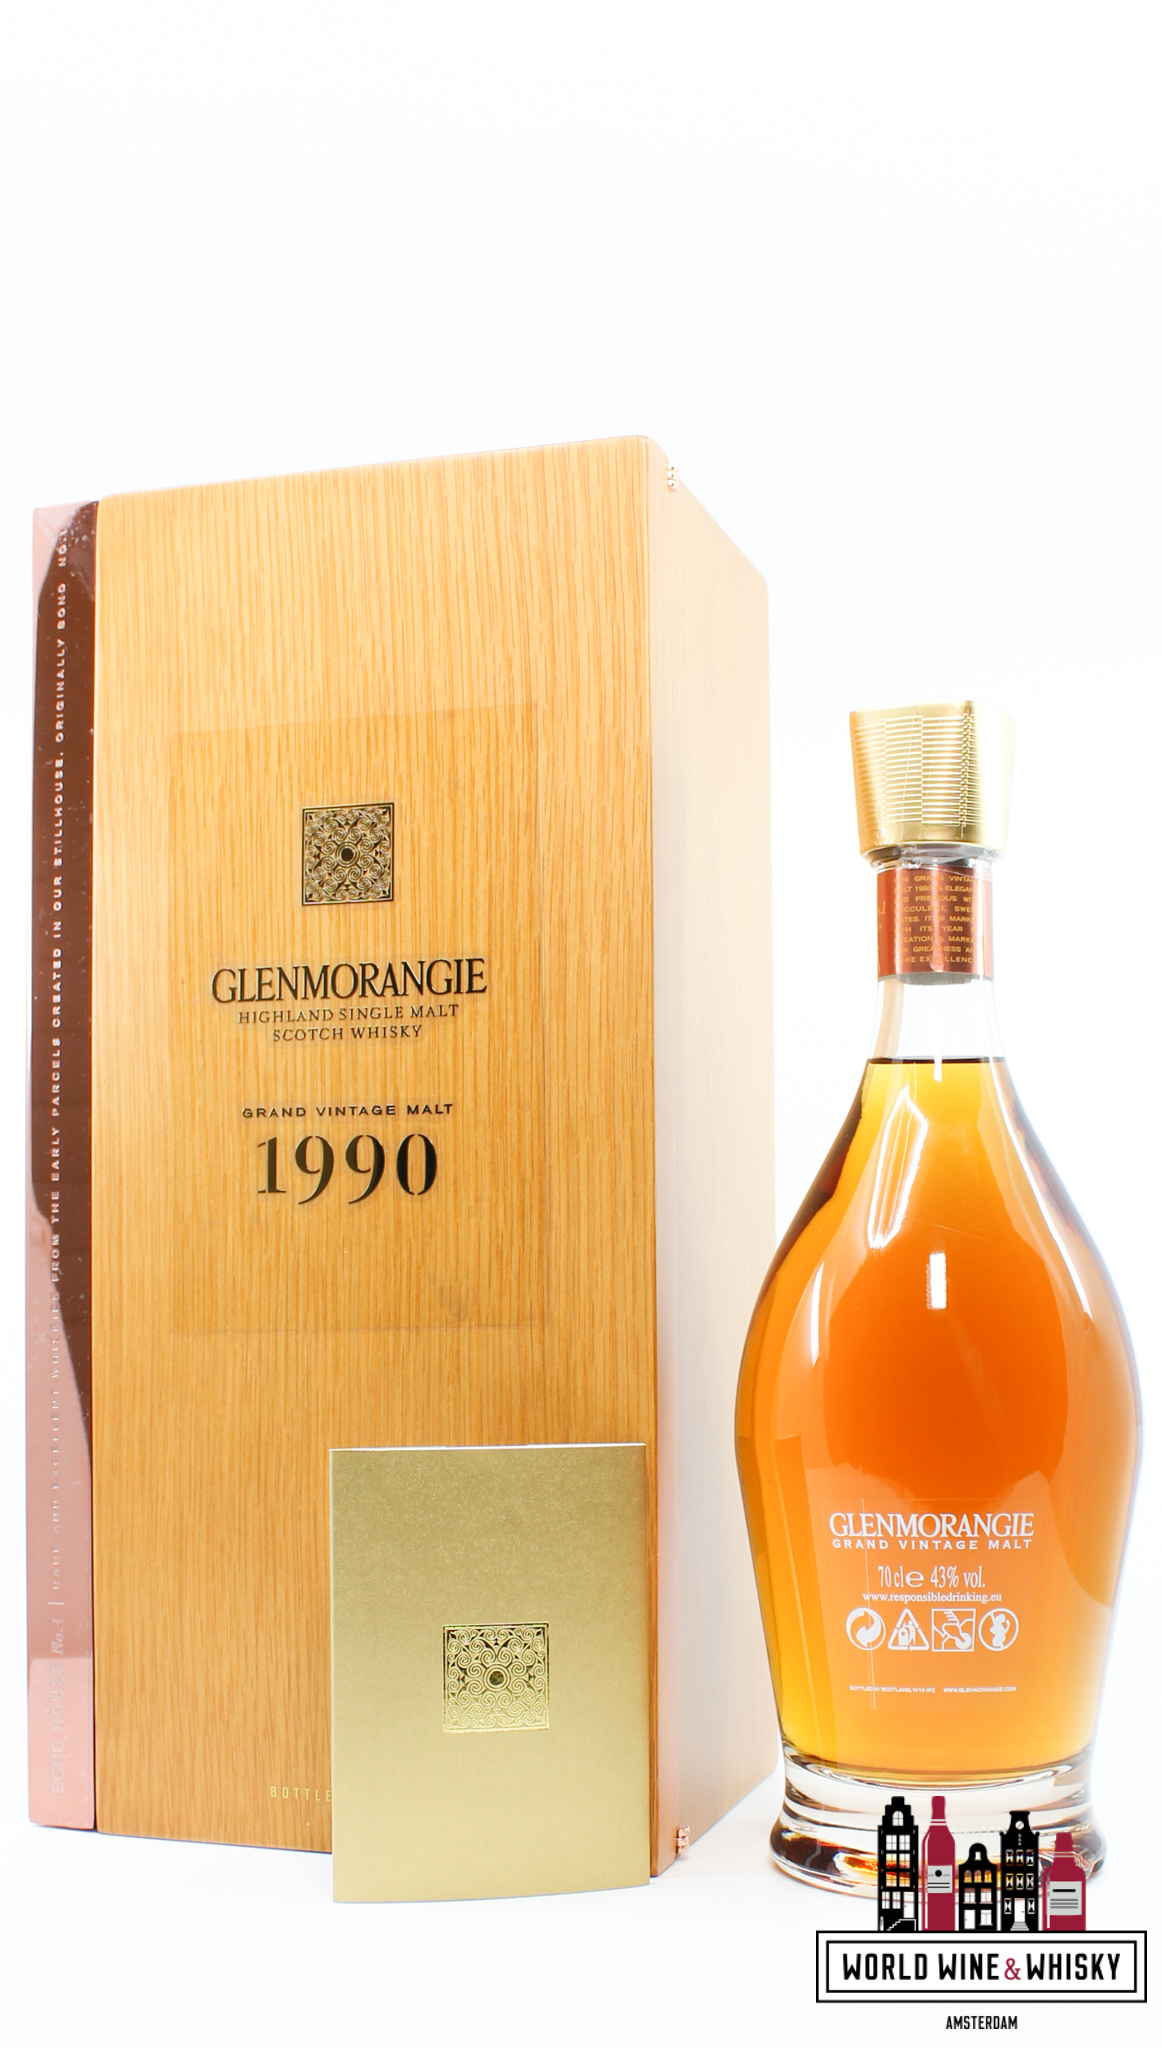 Glenmorangie Glenmorangie 1990 2016 - Grand Vintage Malt - Bond House No. 1 Collection 43% (1 of 5000)